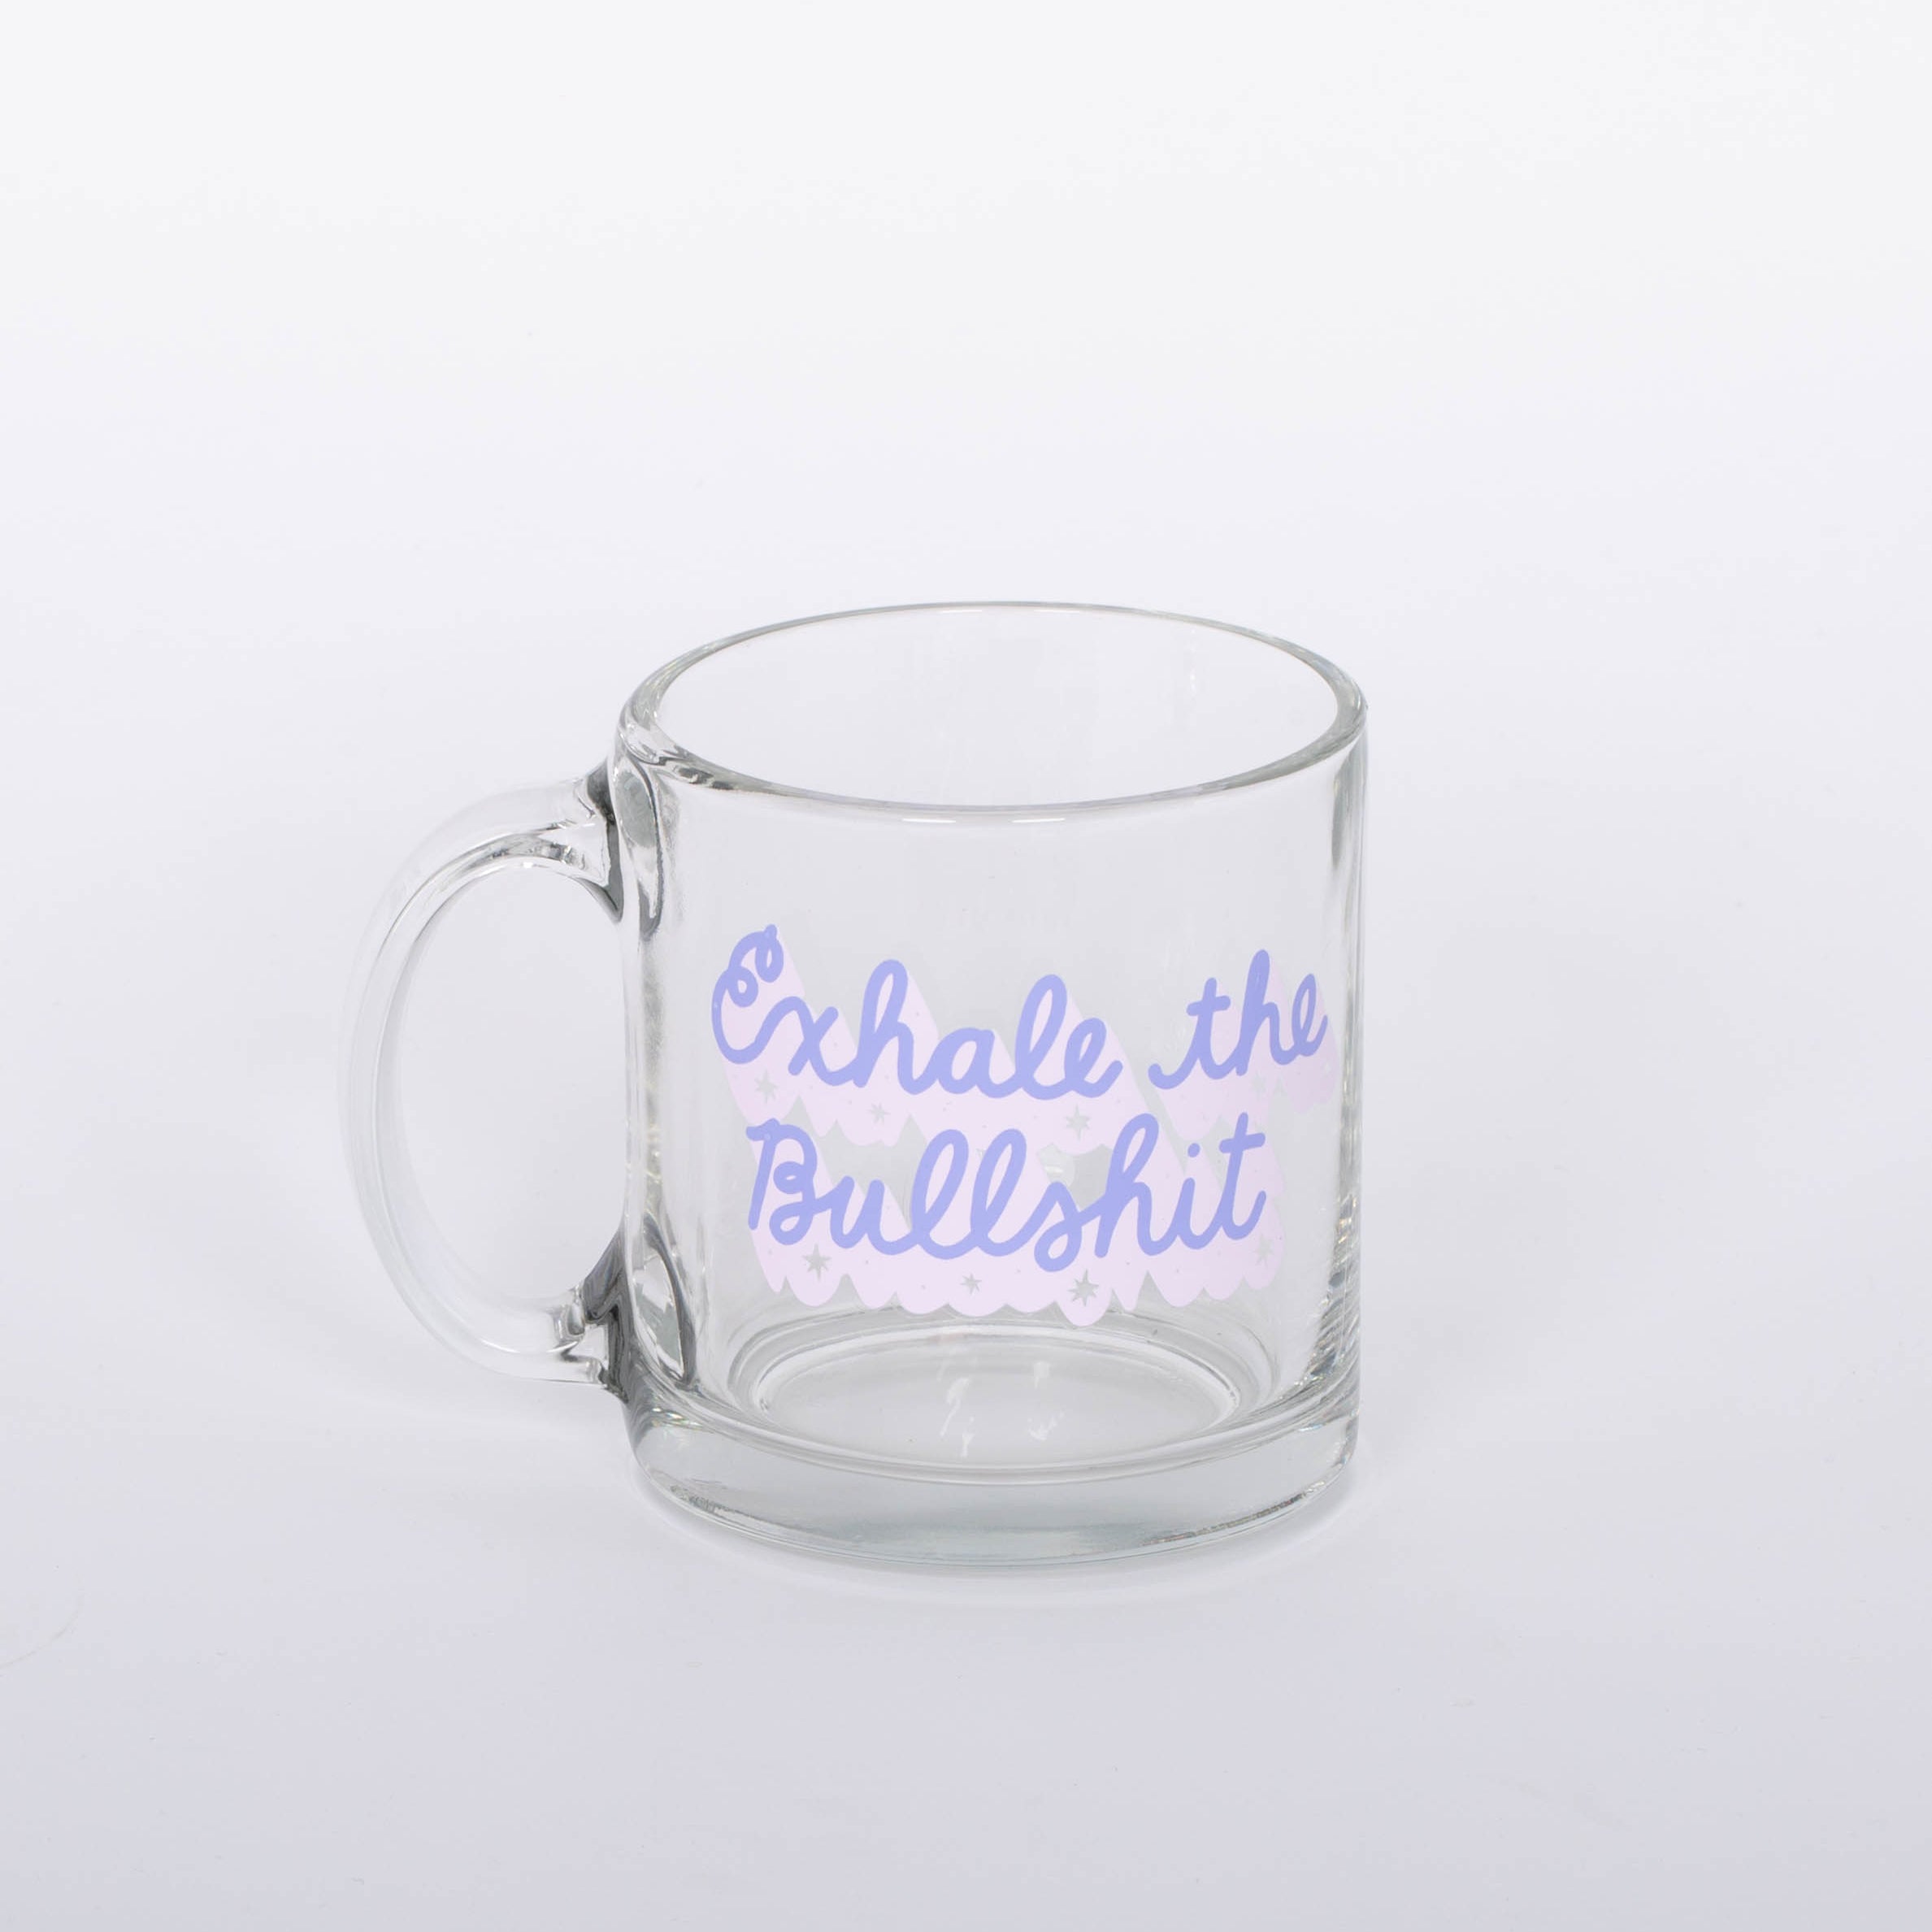 "Exhale the Bullshit" glass mug. 